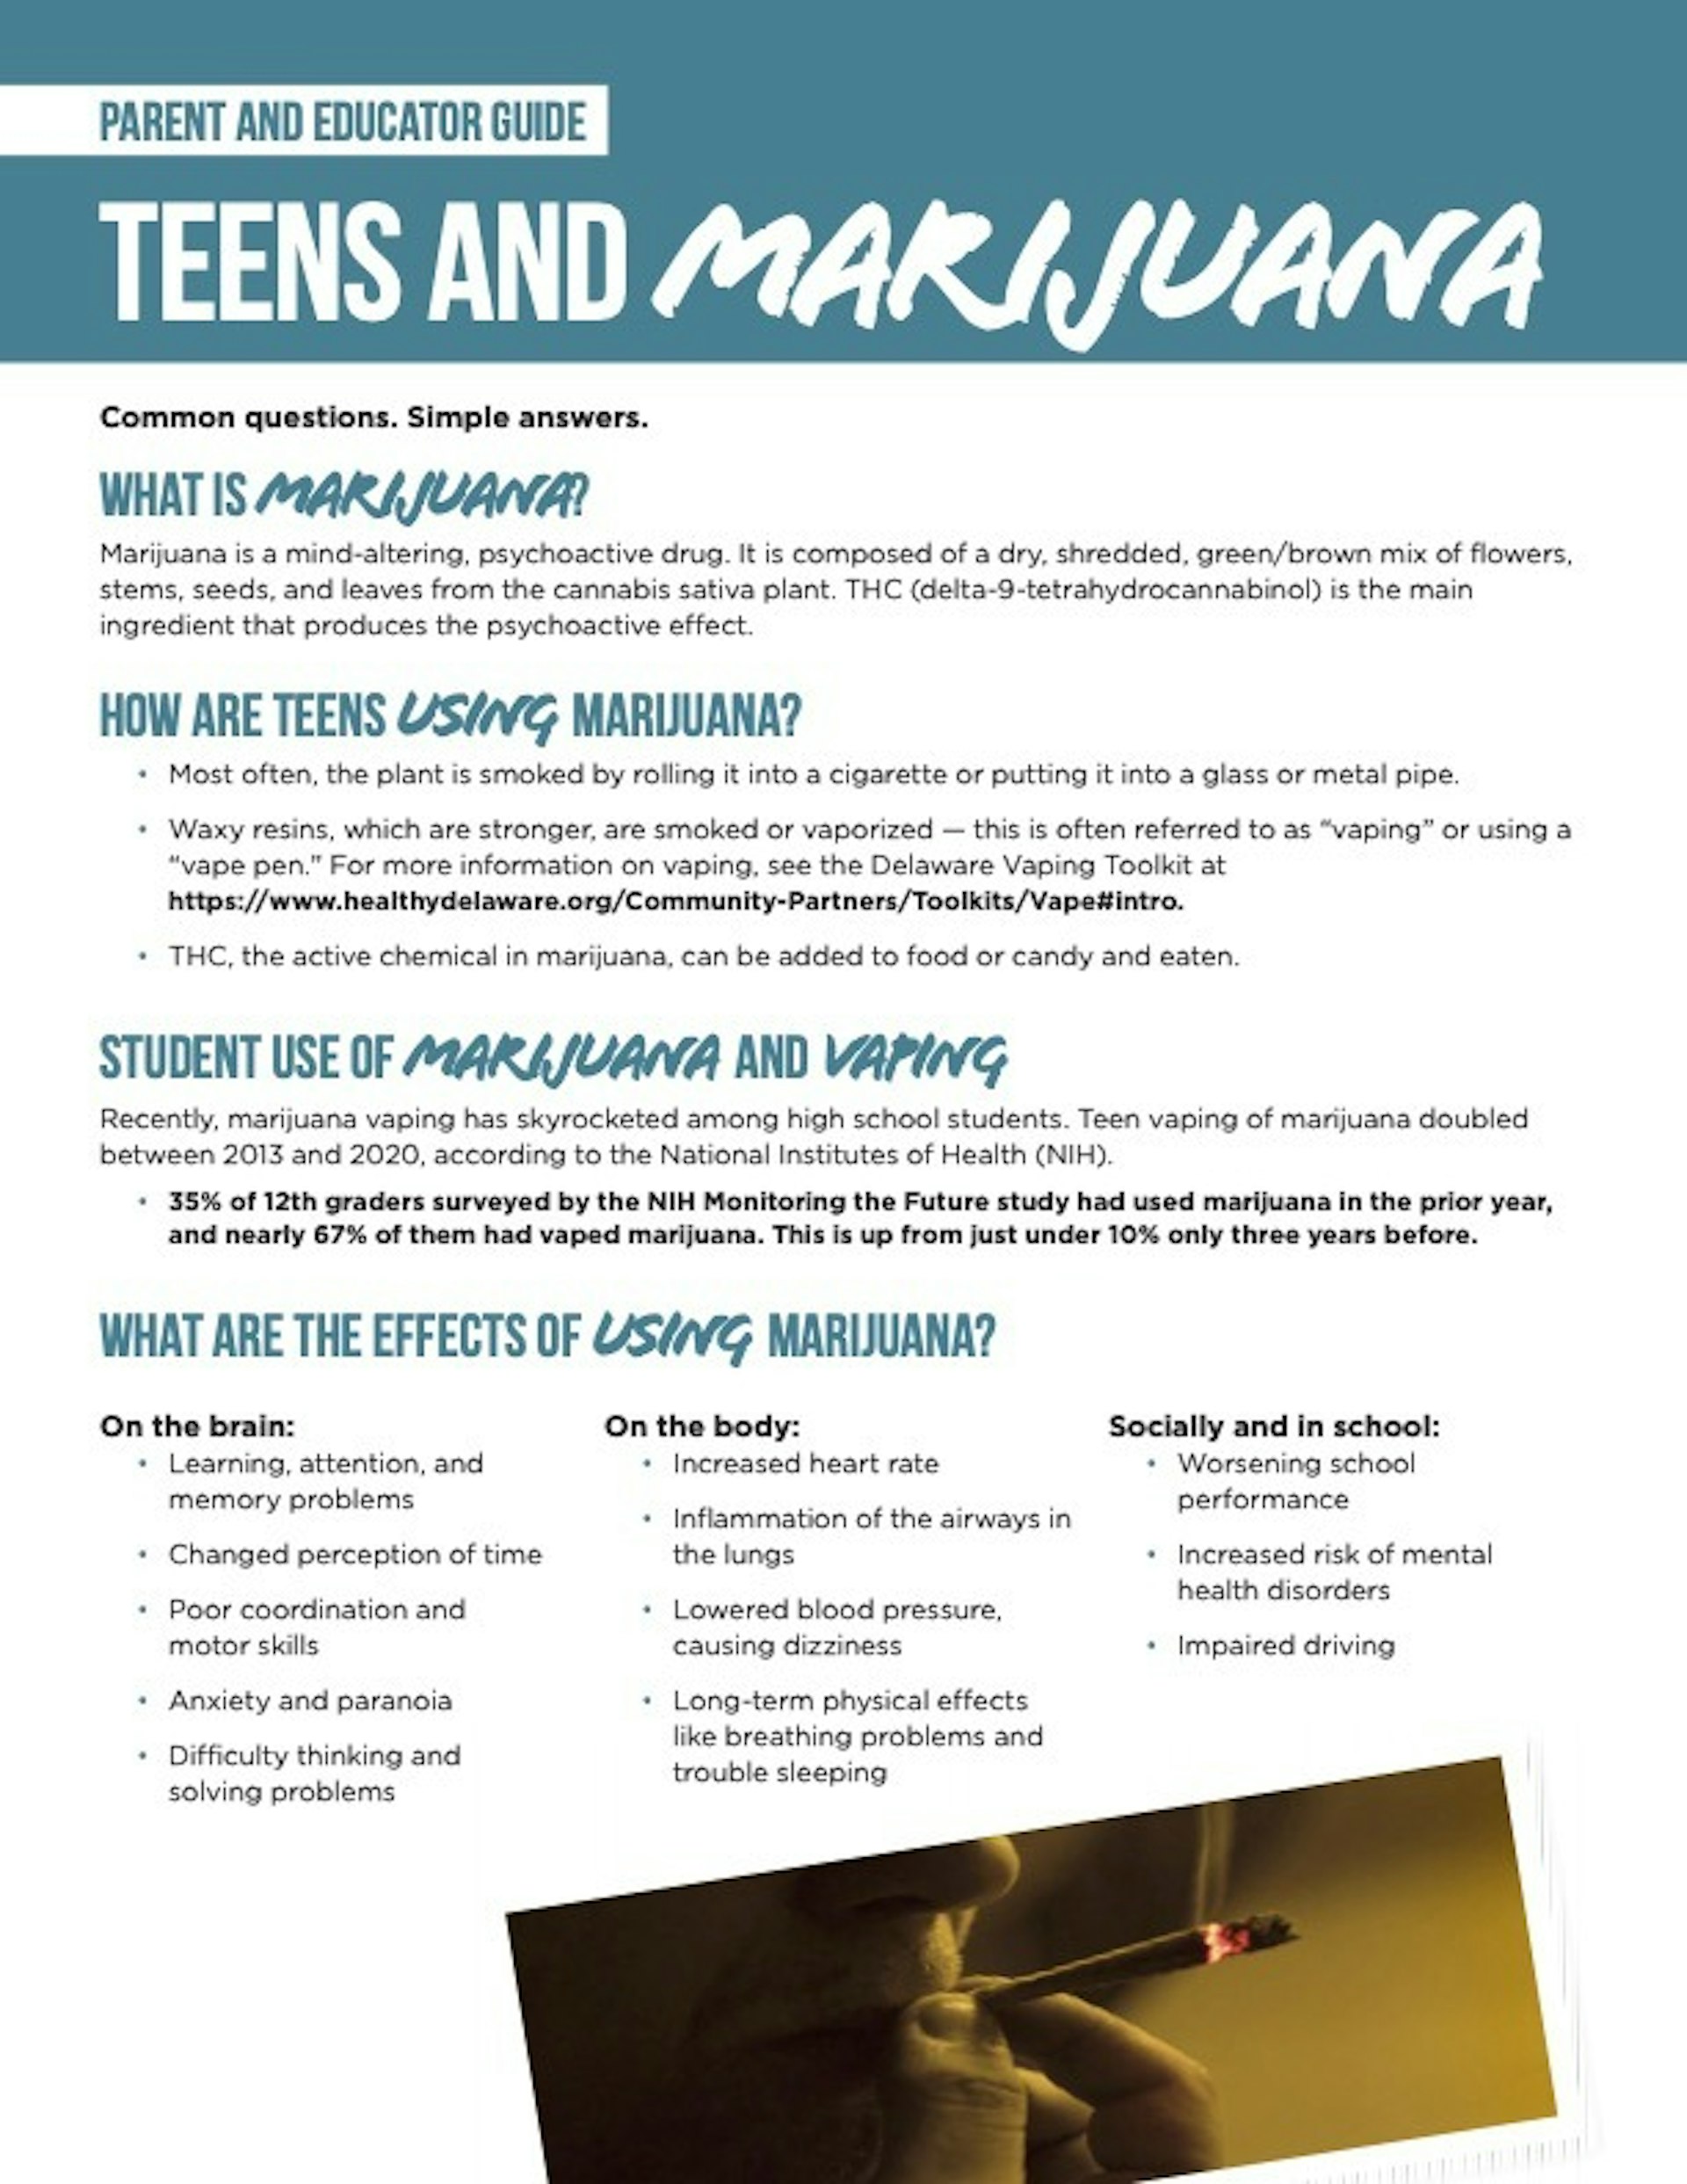 Teens and marijuana